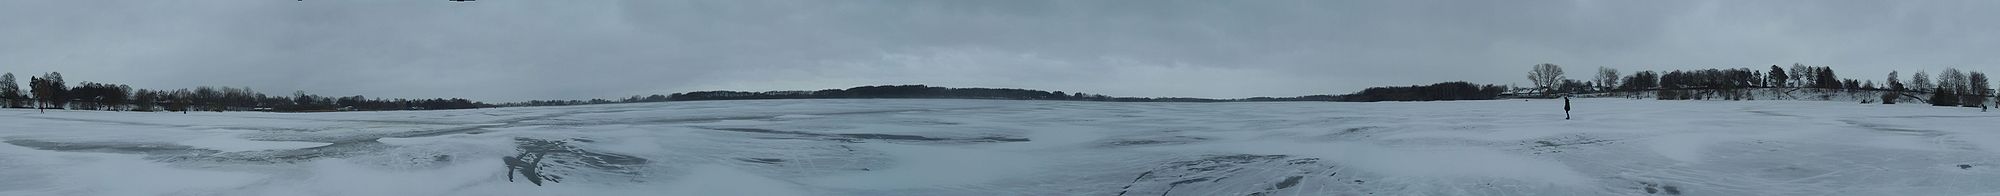 360° Panorama des zugefrorenen Einfelder Sees, Januar 2010